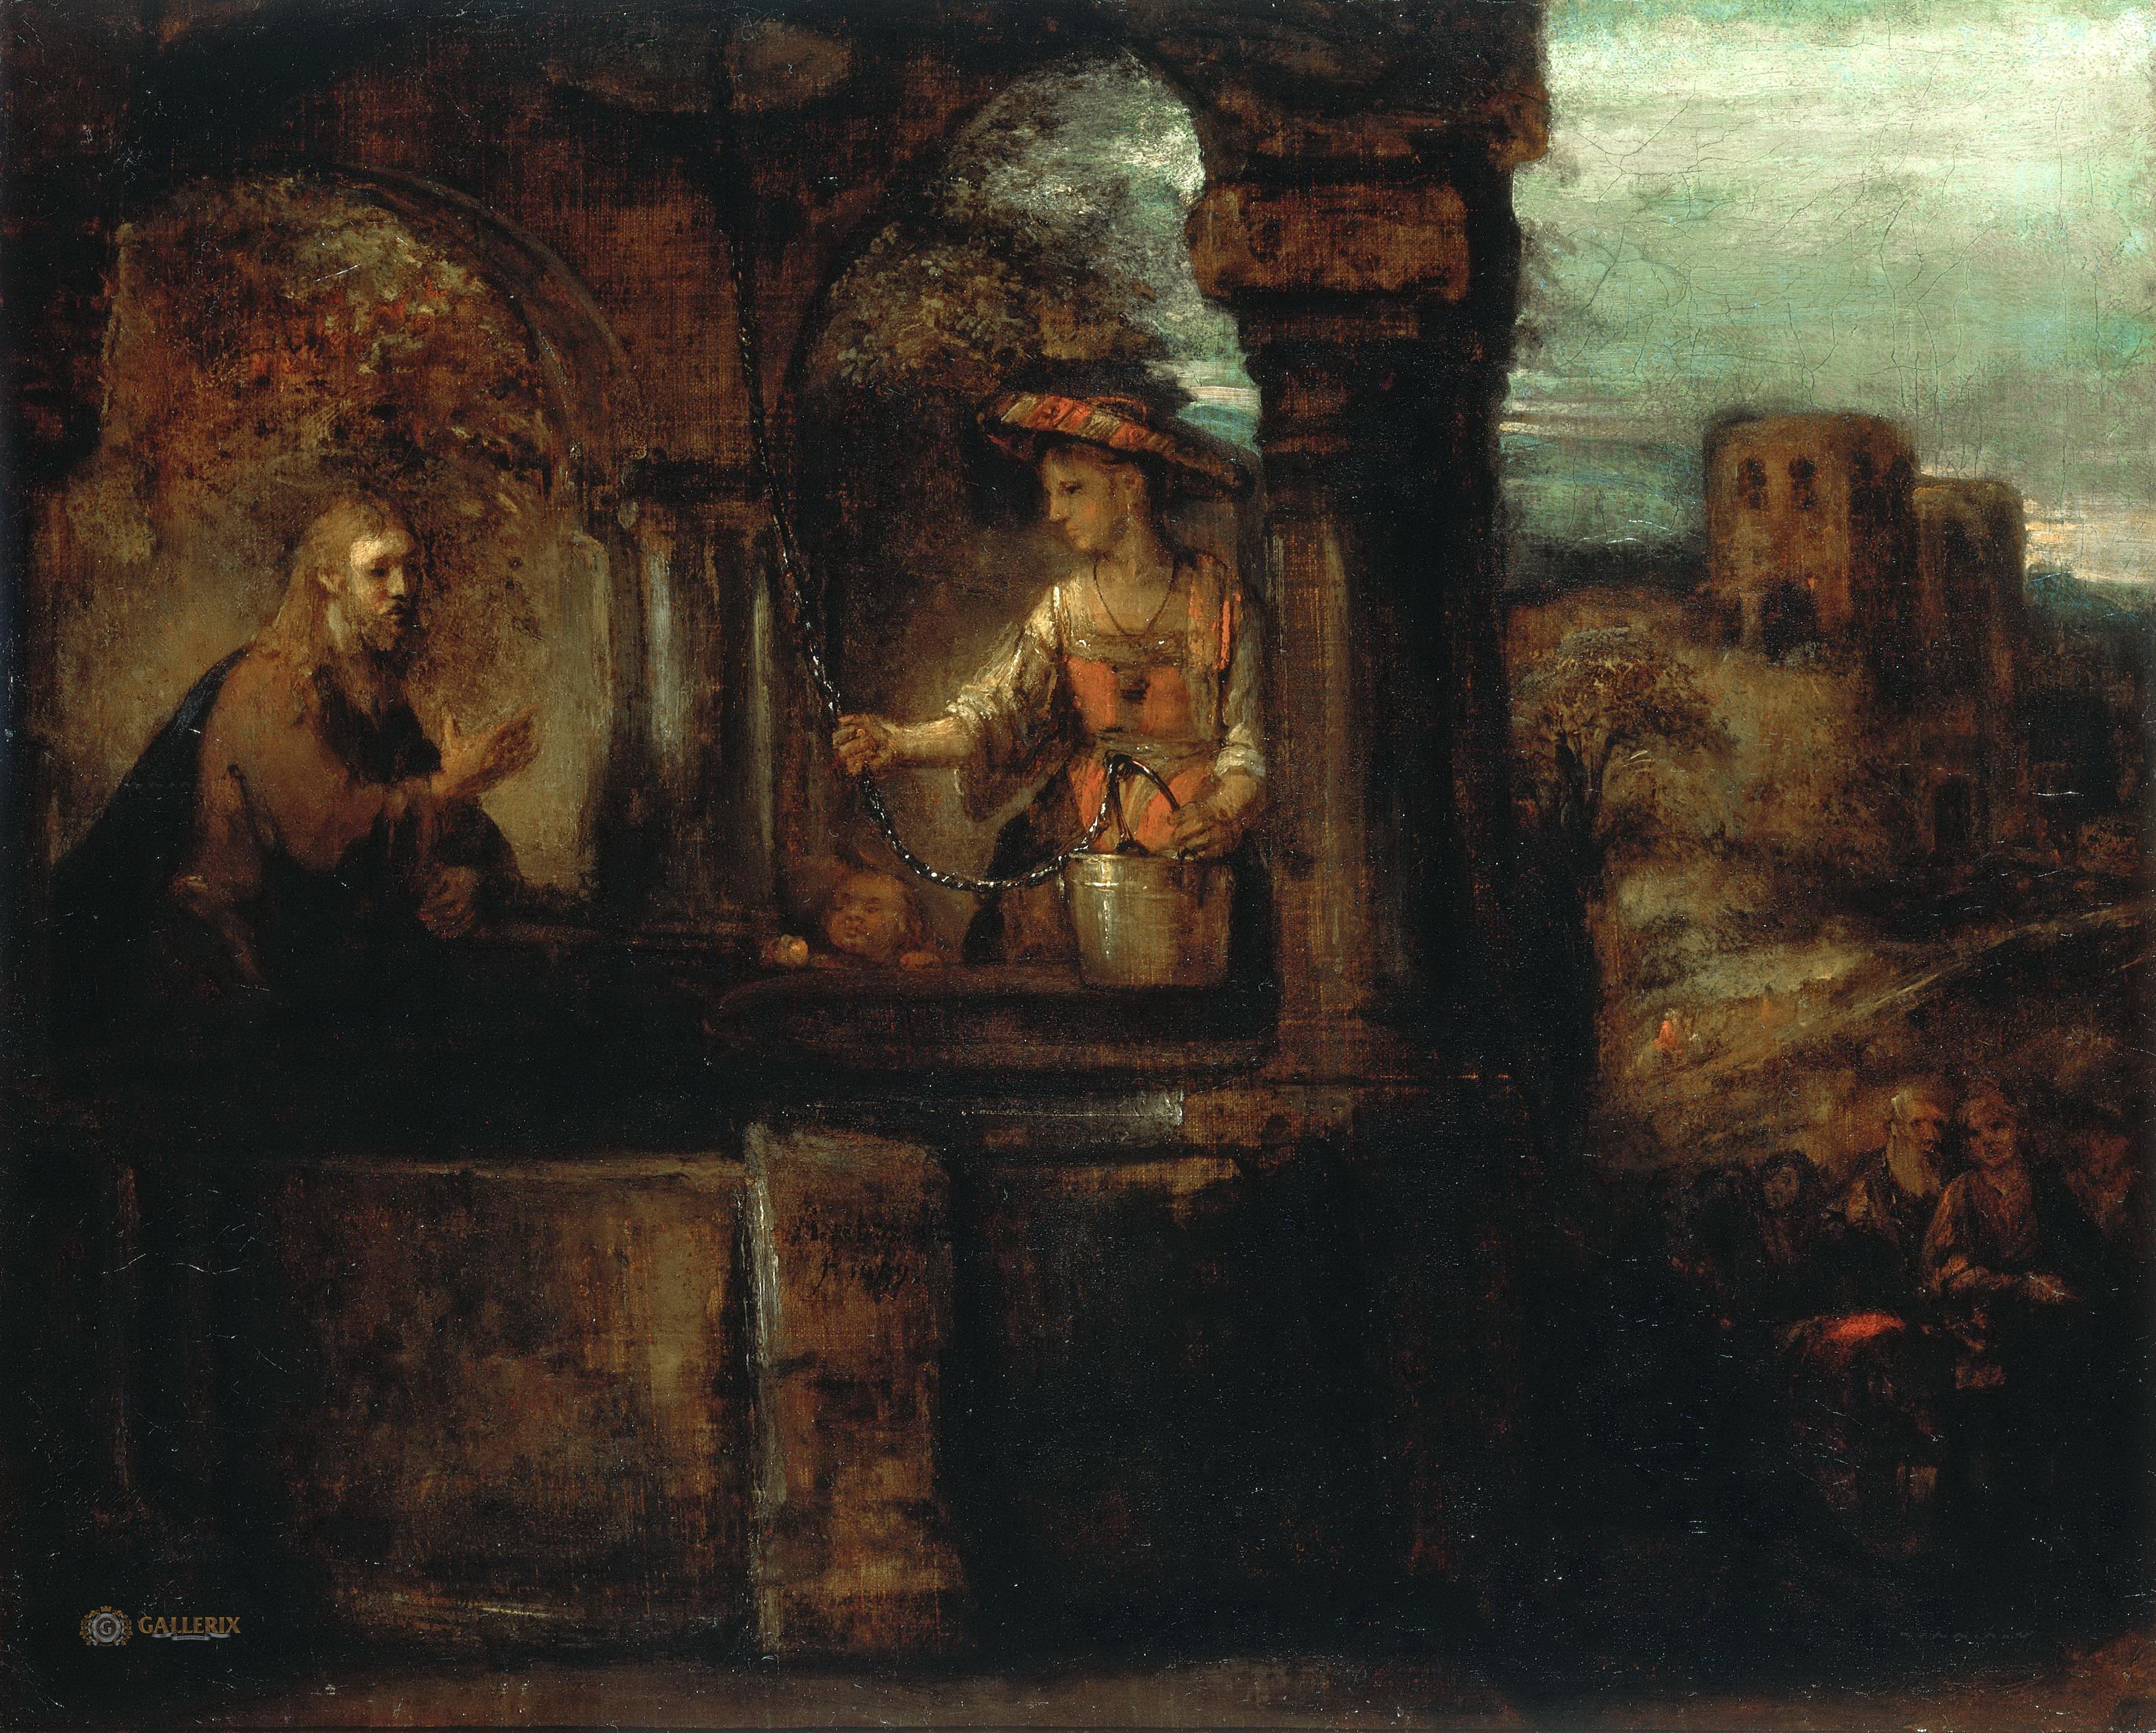 Рембранд Харменс ван Рейн. "Беседа Христа с самарянкой". 1659. Эрмитаж, Санкт-Петербург.